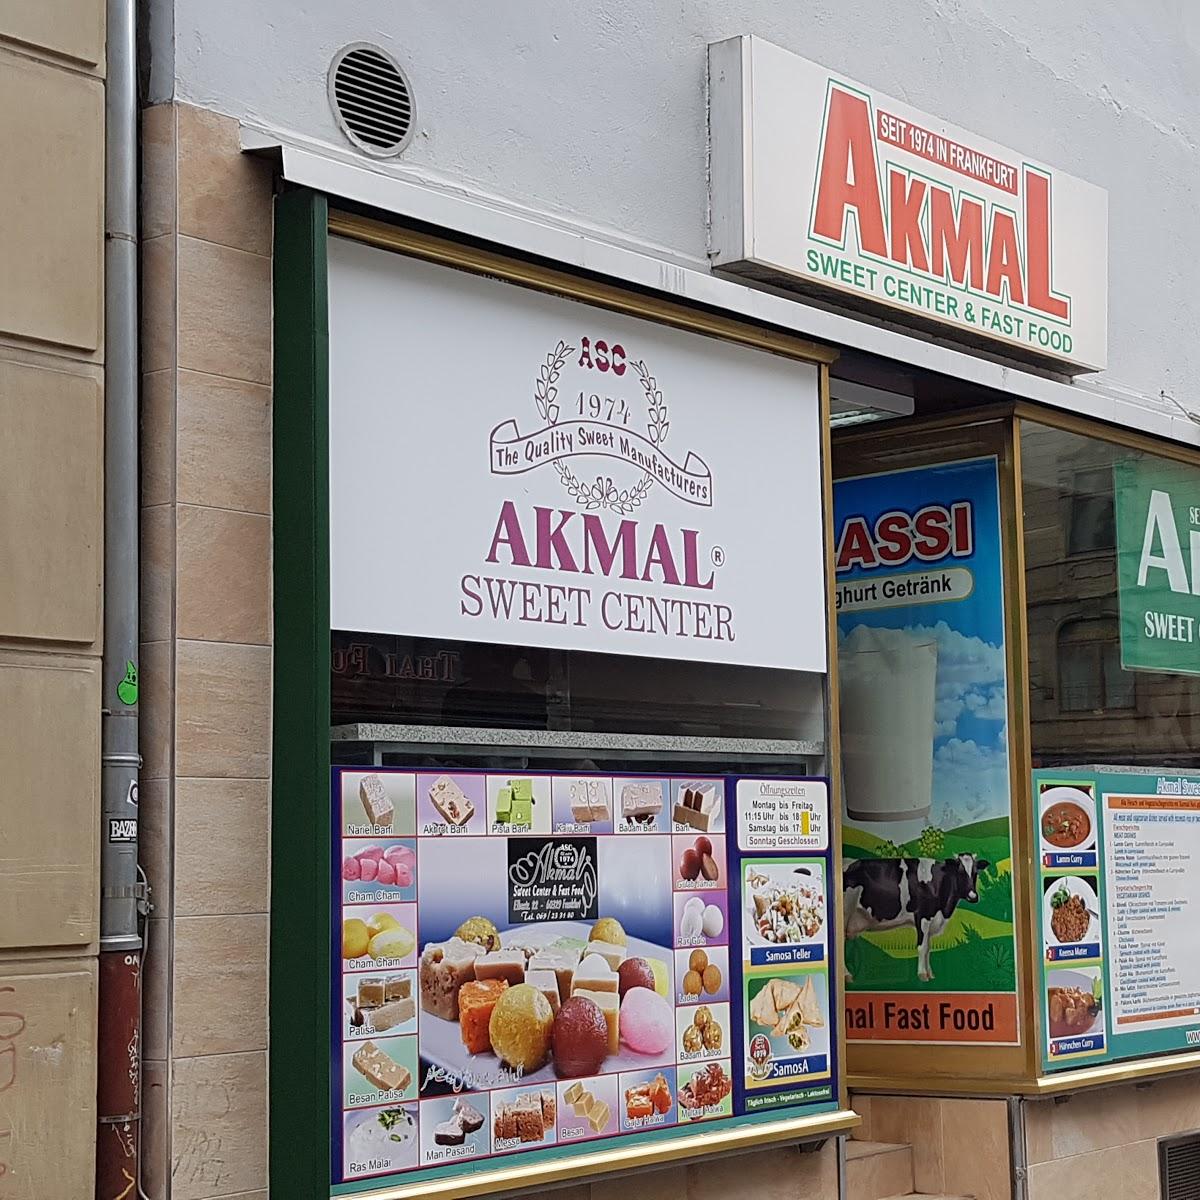 Restaurant "Akmal Sweet Center" in Frankfurt am Main